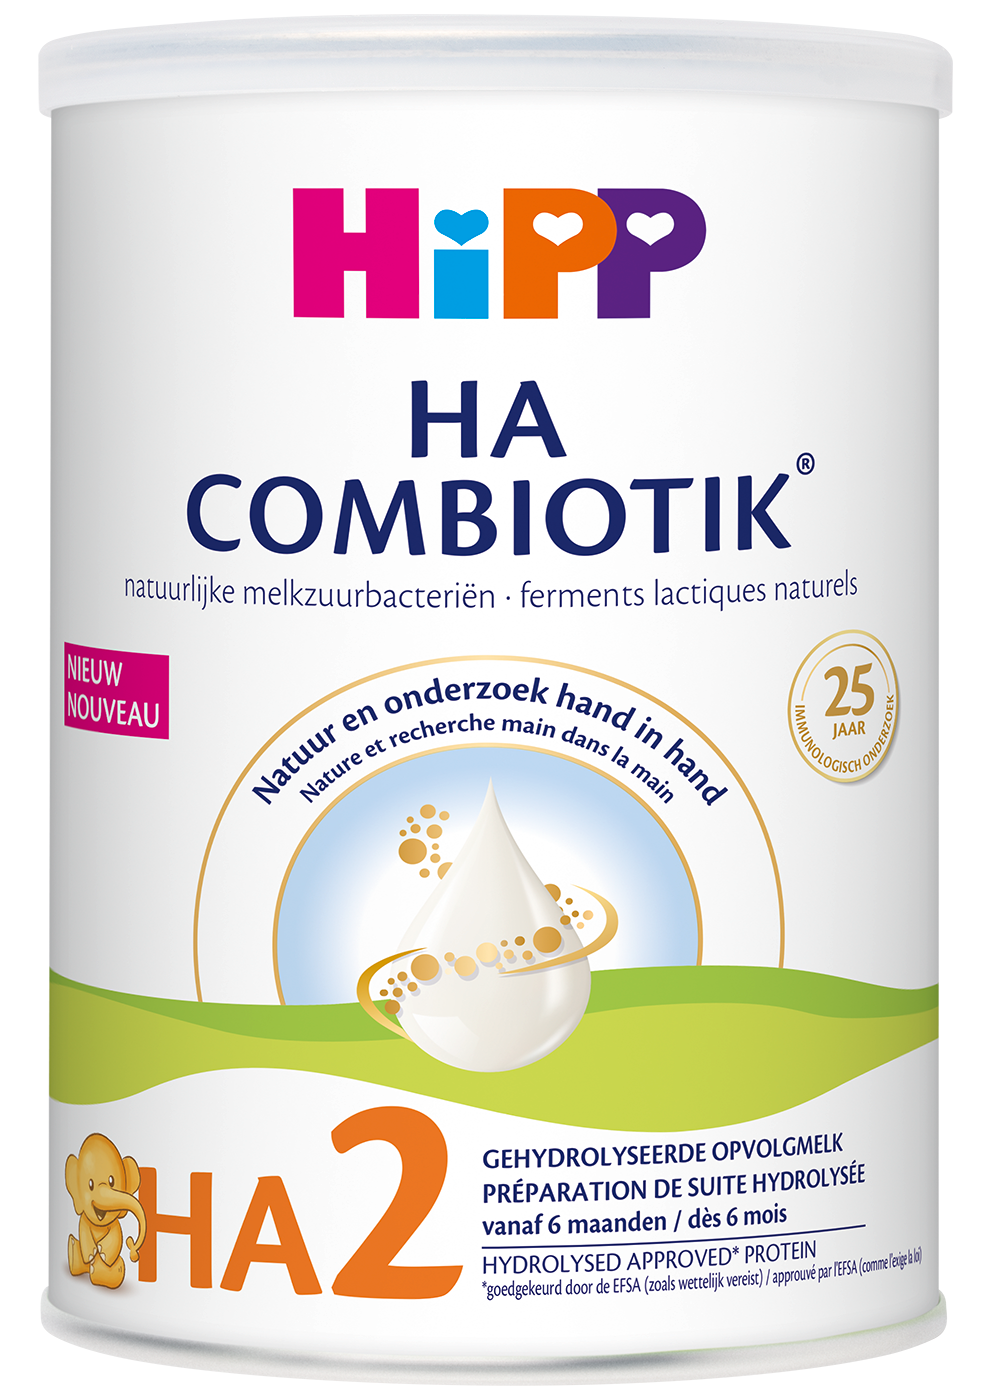 Hipp Dutch HA2 (Hypoallergenic) from 6 months (800g) (4 cans)